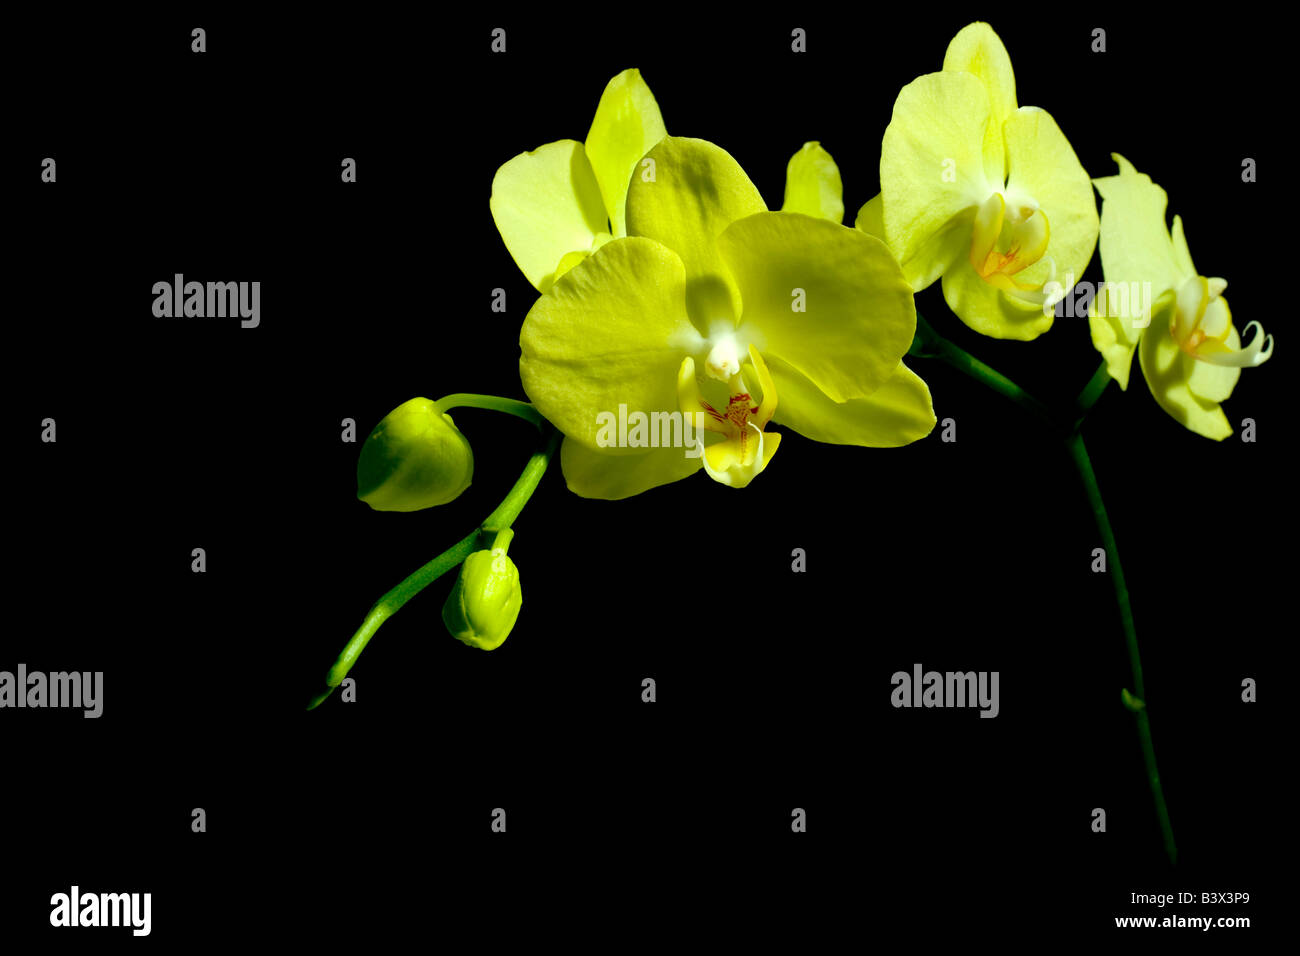 Yellow flowers on black background Stock Photo